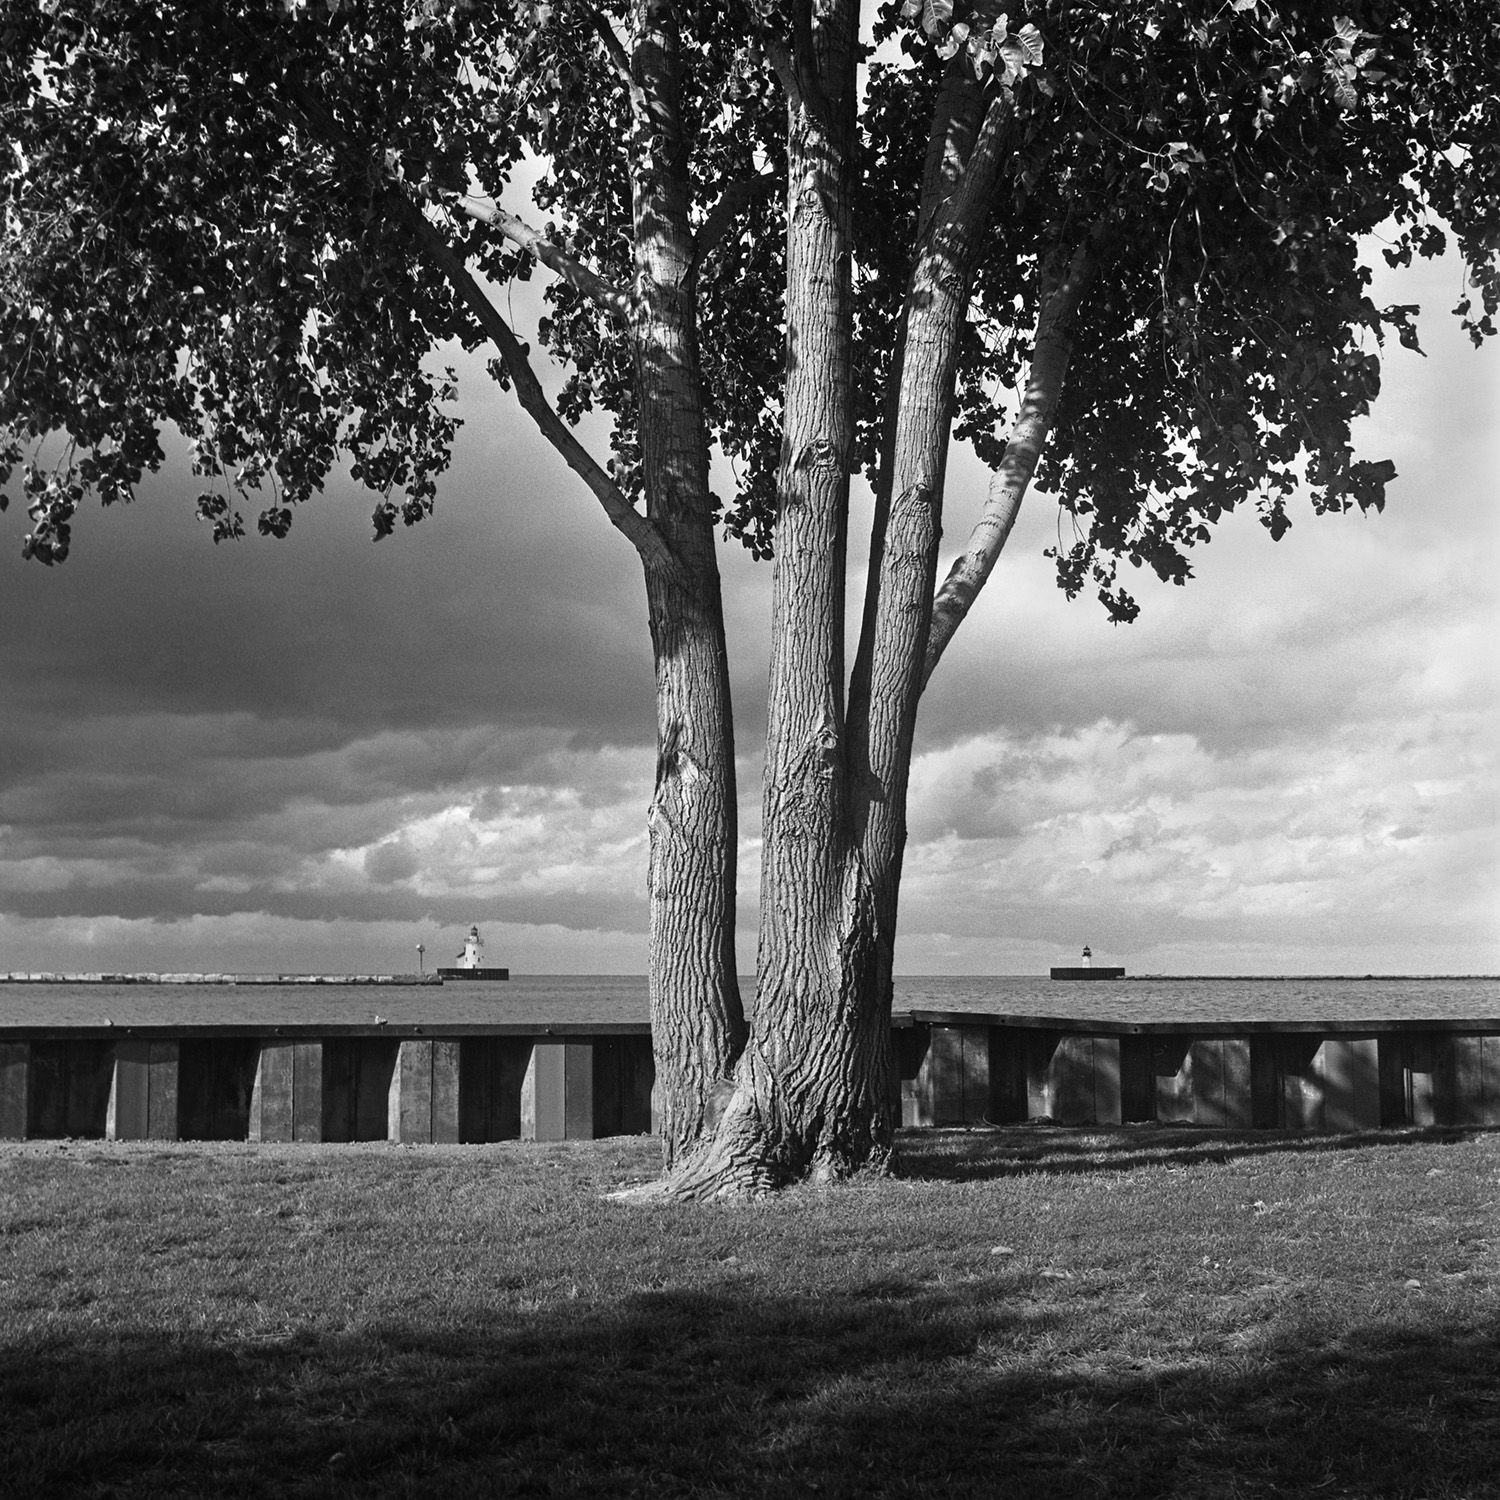  Whiskey Island Tree Cleveland, OH 6x6 BW film 